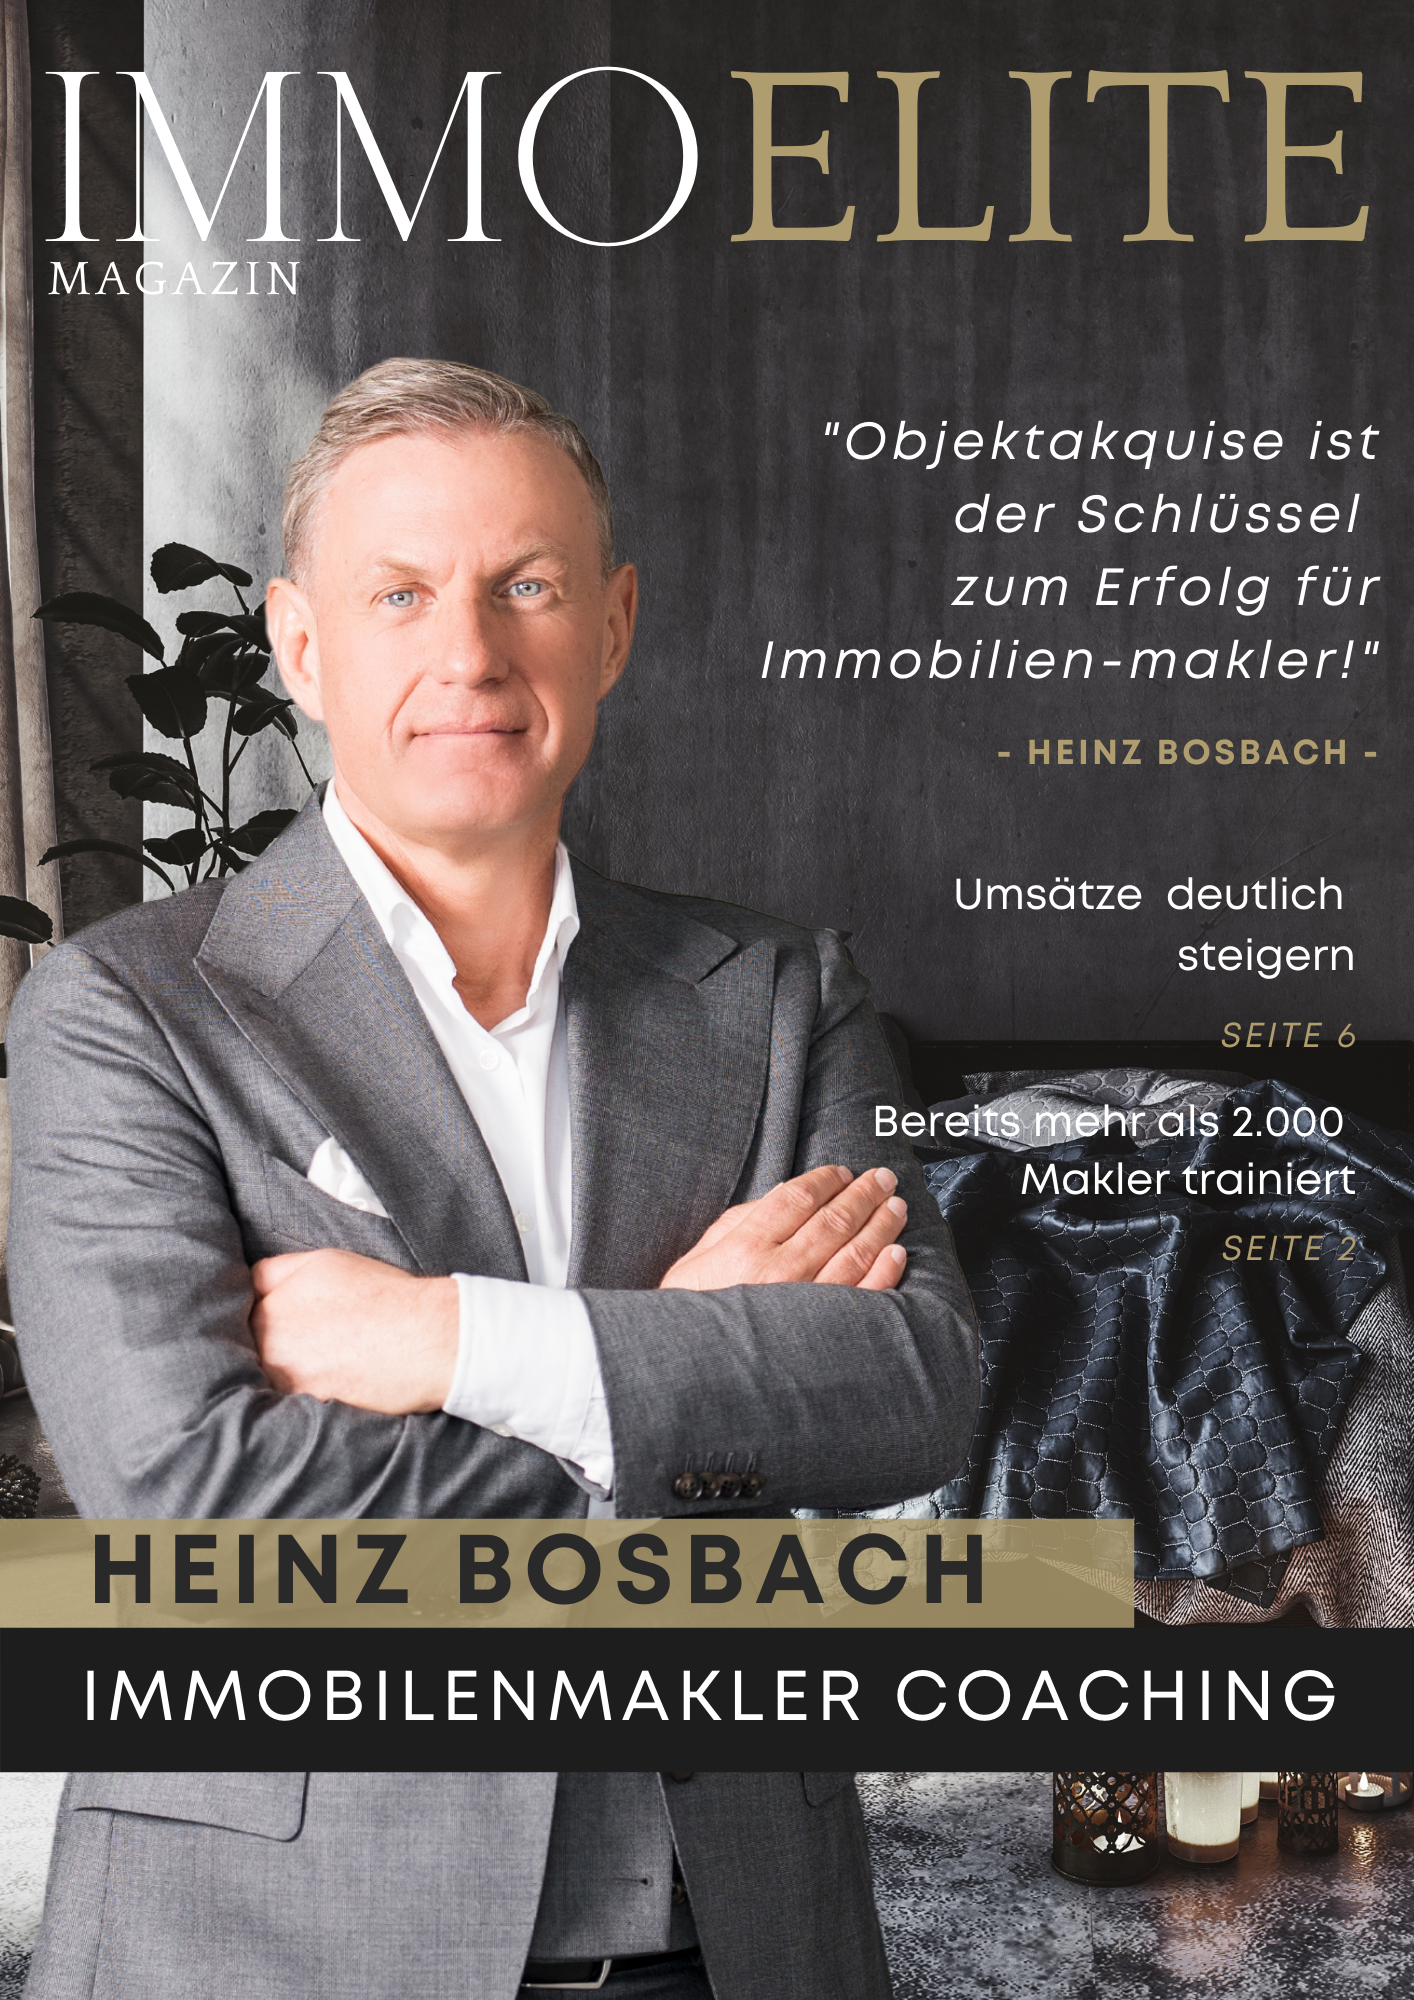 ImmoElite Magazin - Heinz Bosbach Consulting